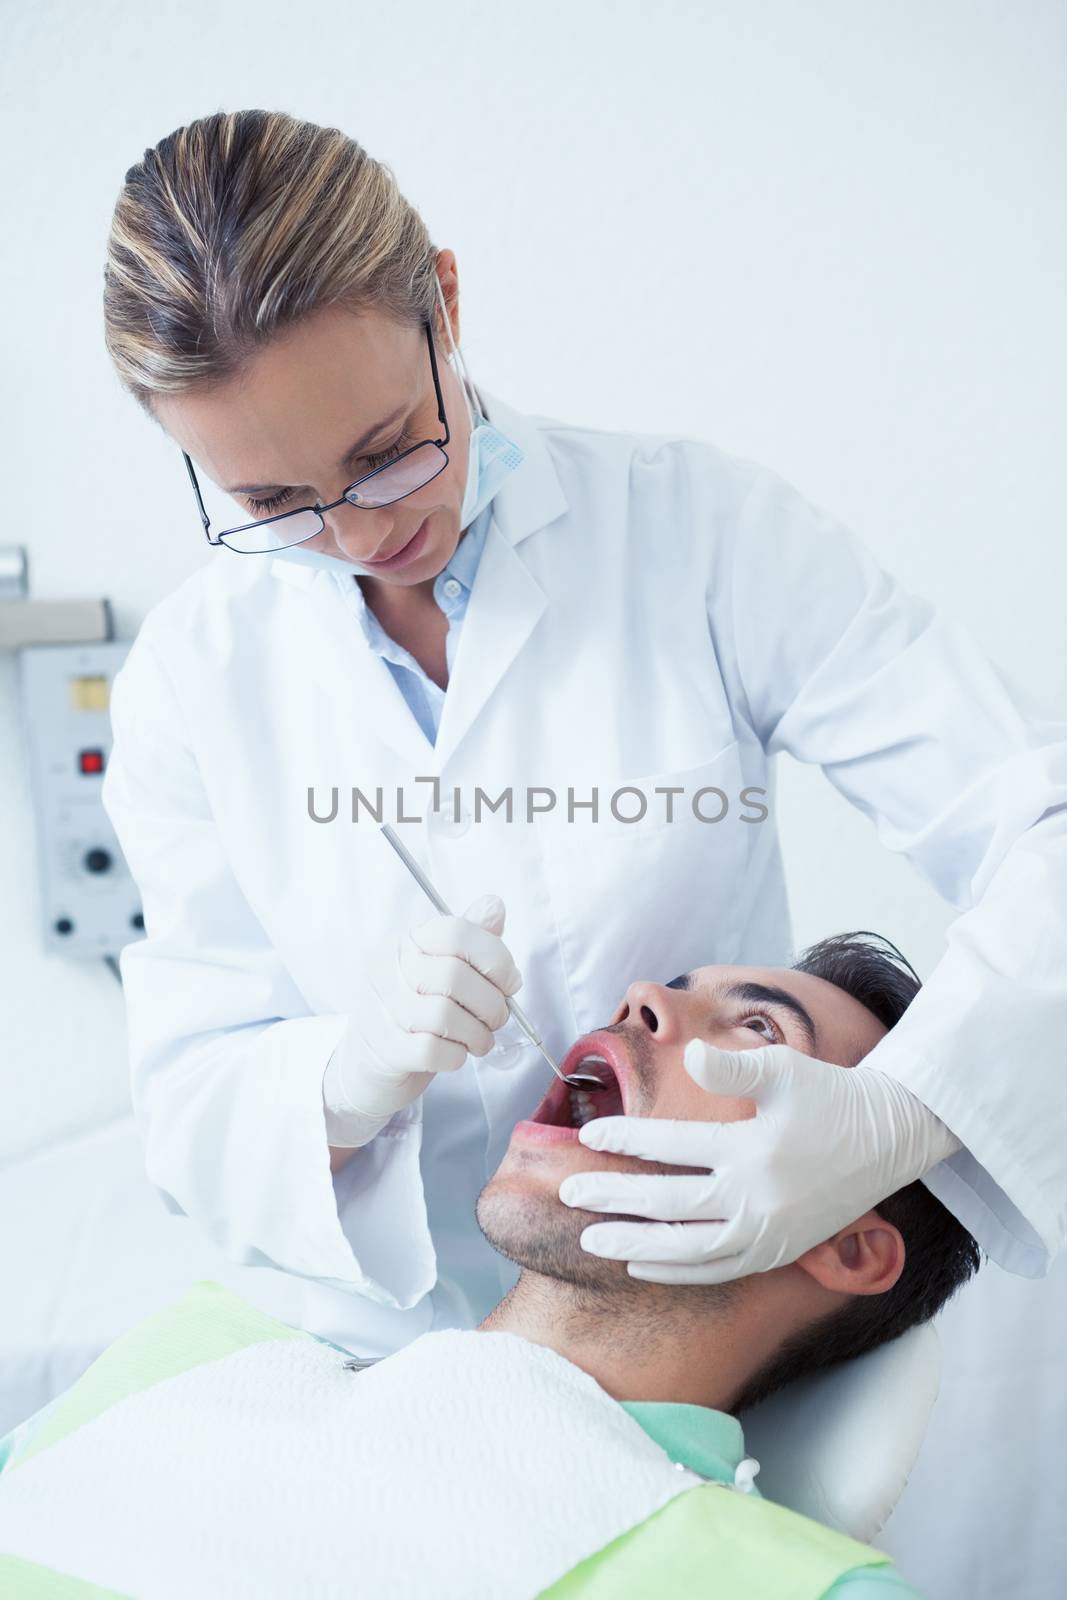 Female dentist examining mans teeth in the dentists chair